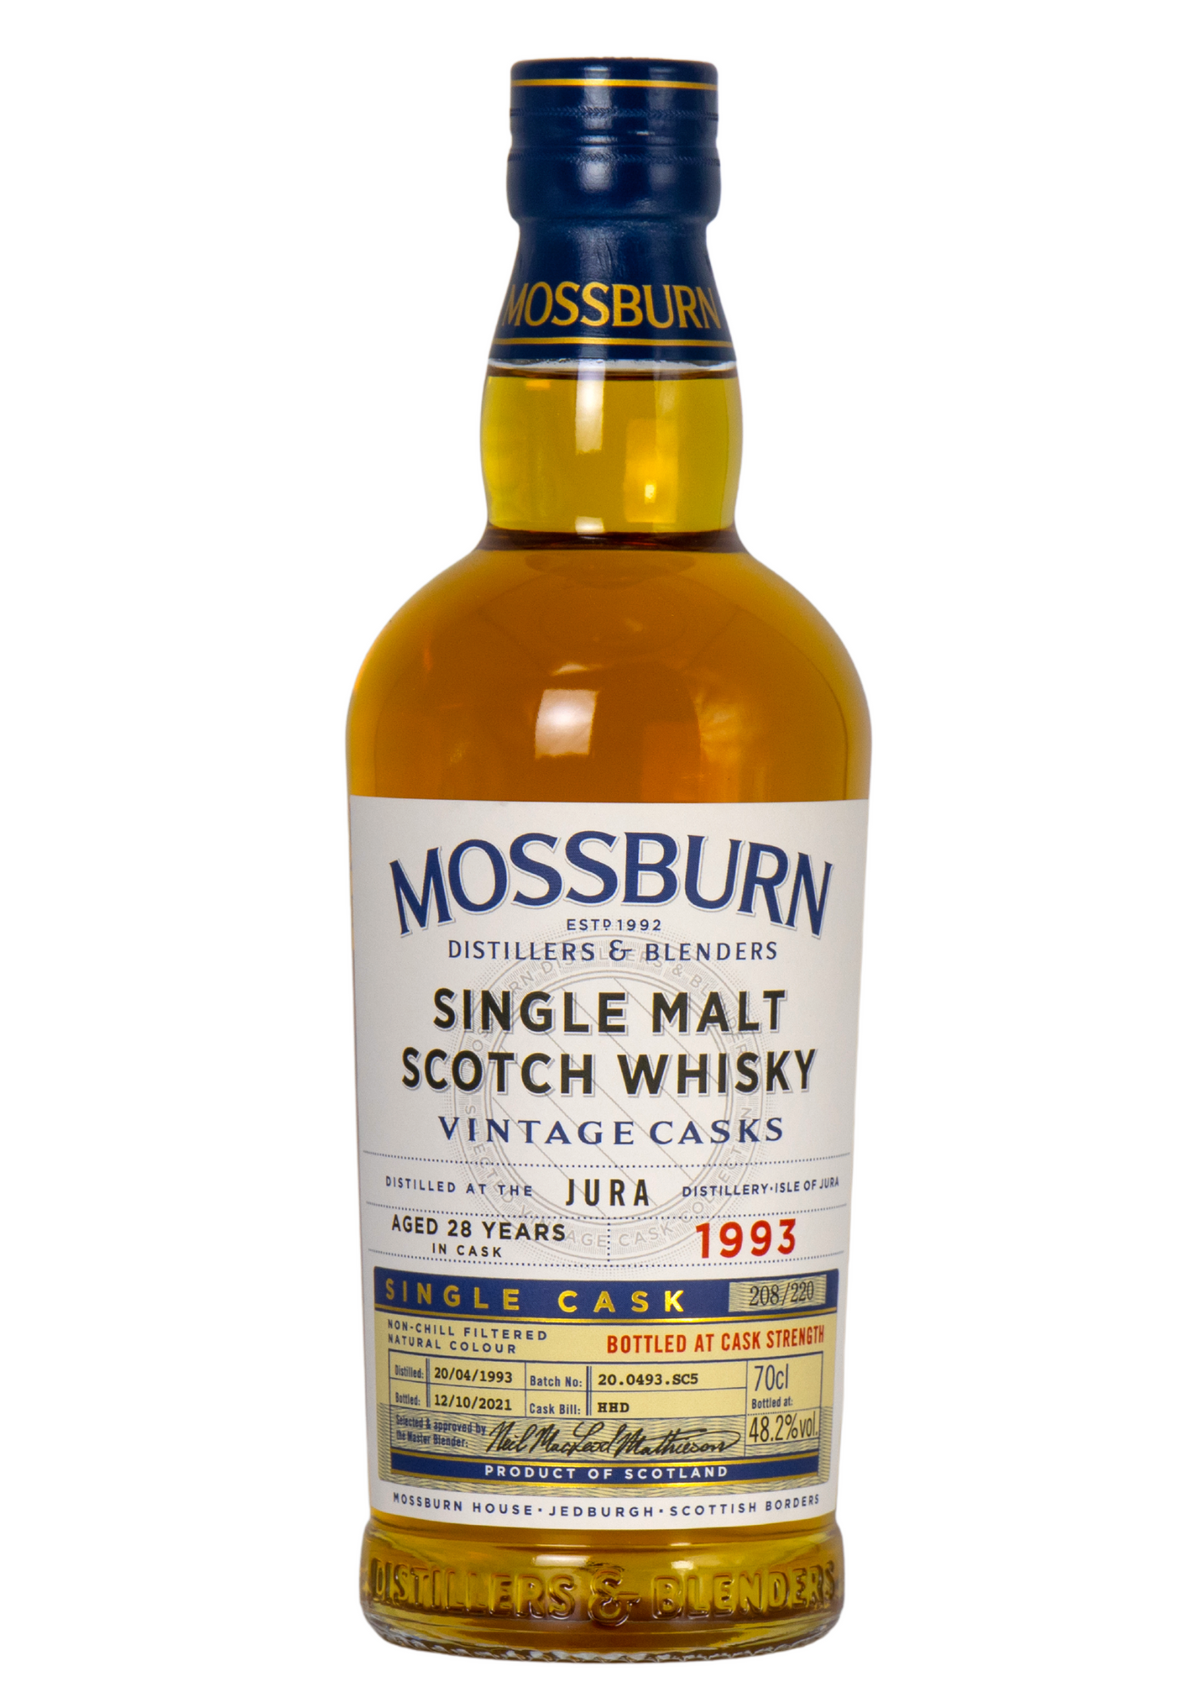 Bottle of 1993 Mossburn Jura 28-Year-Old Single Cask, 48.2% - The Spirits Room